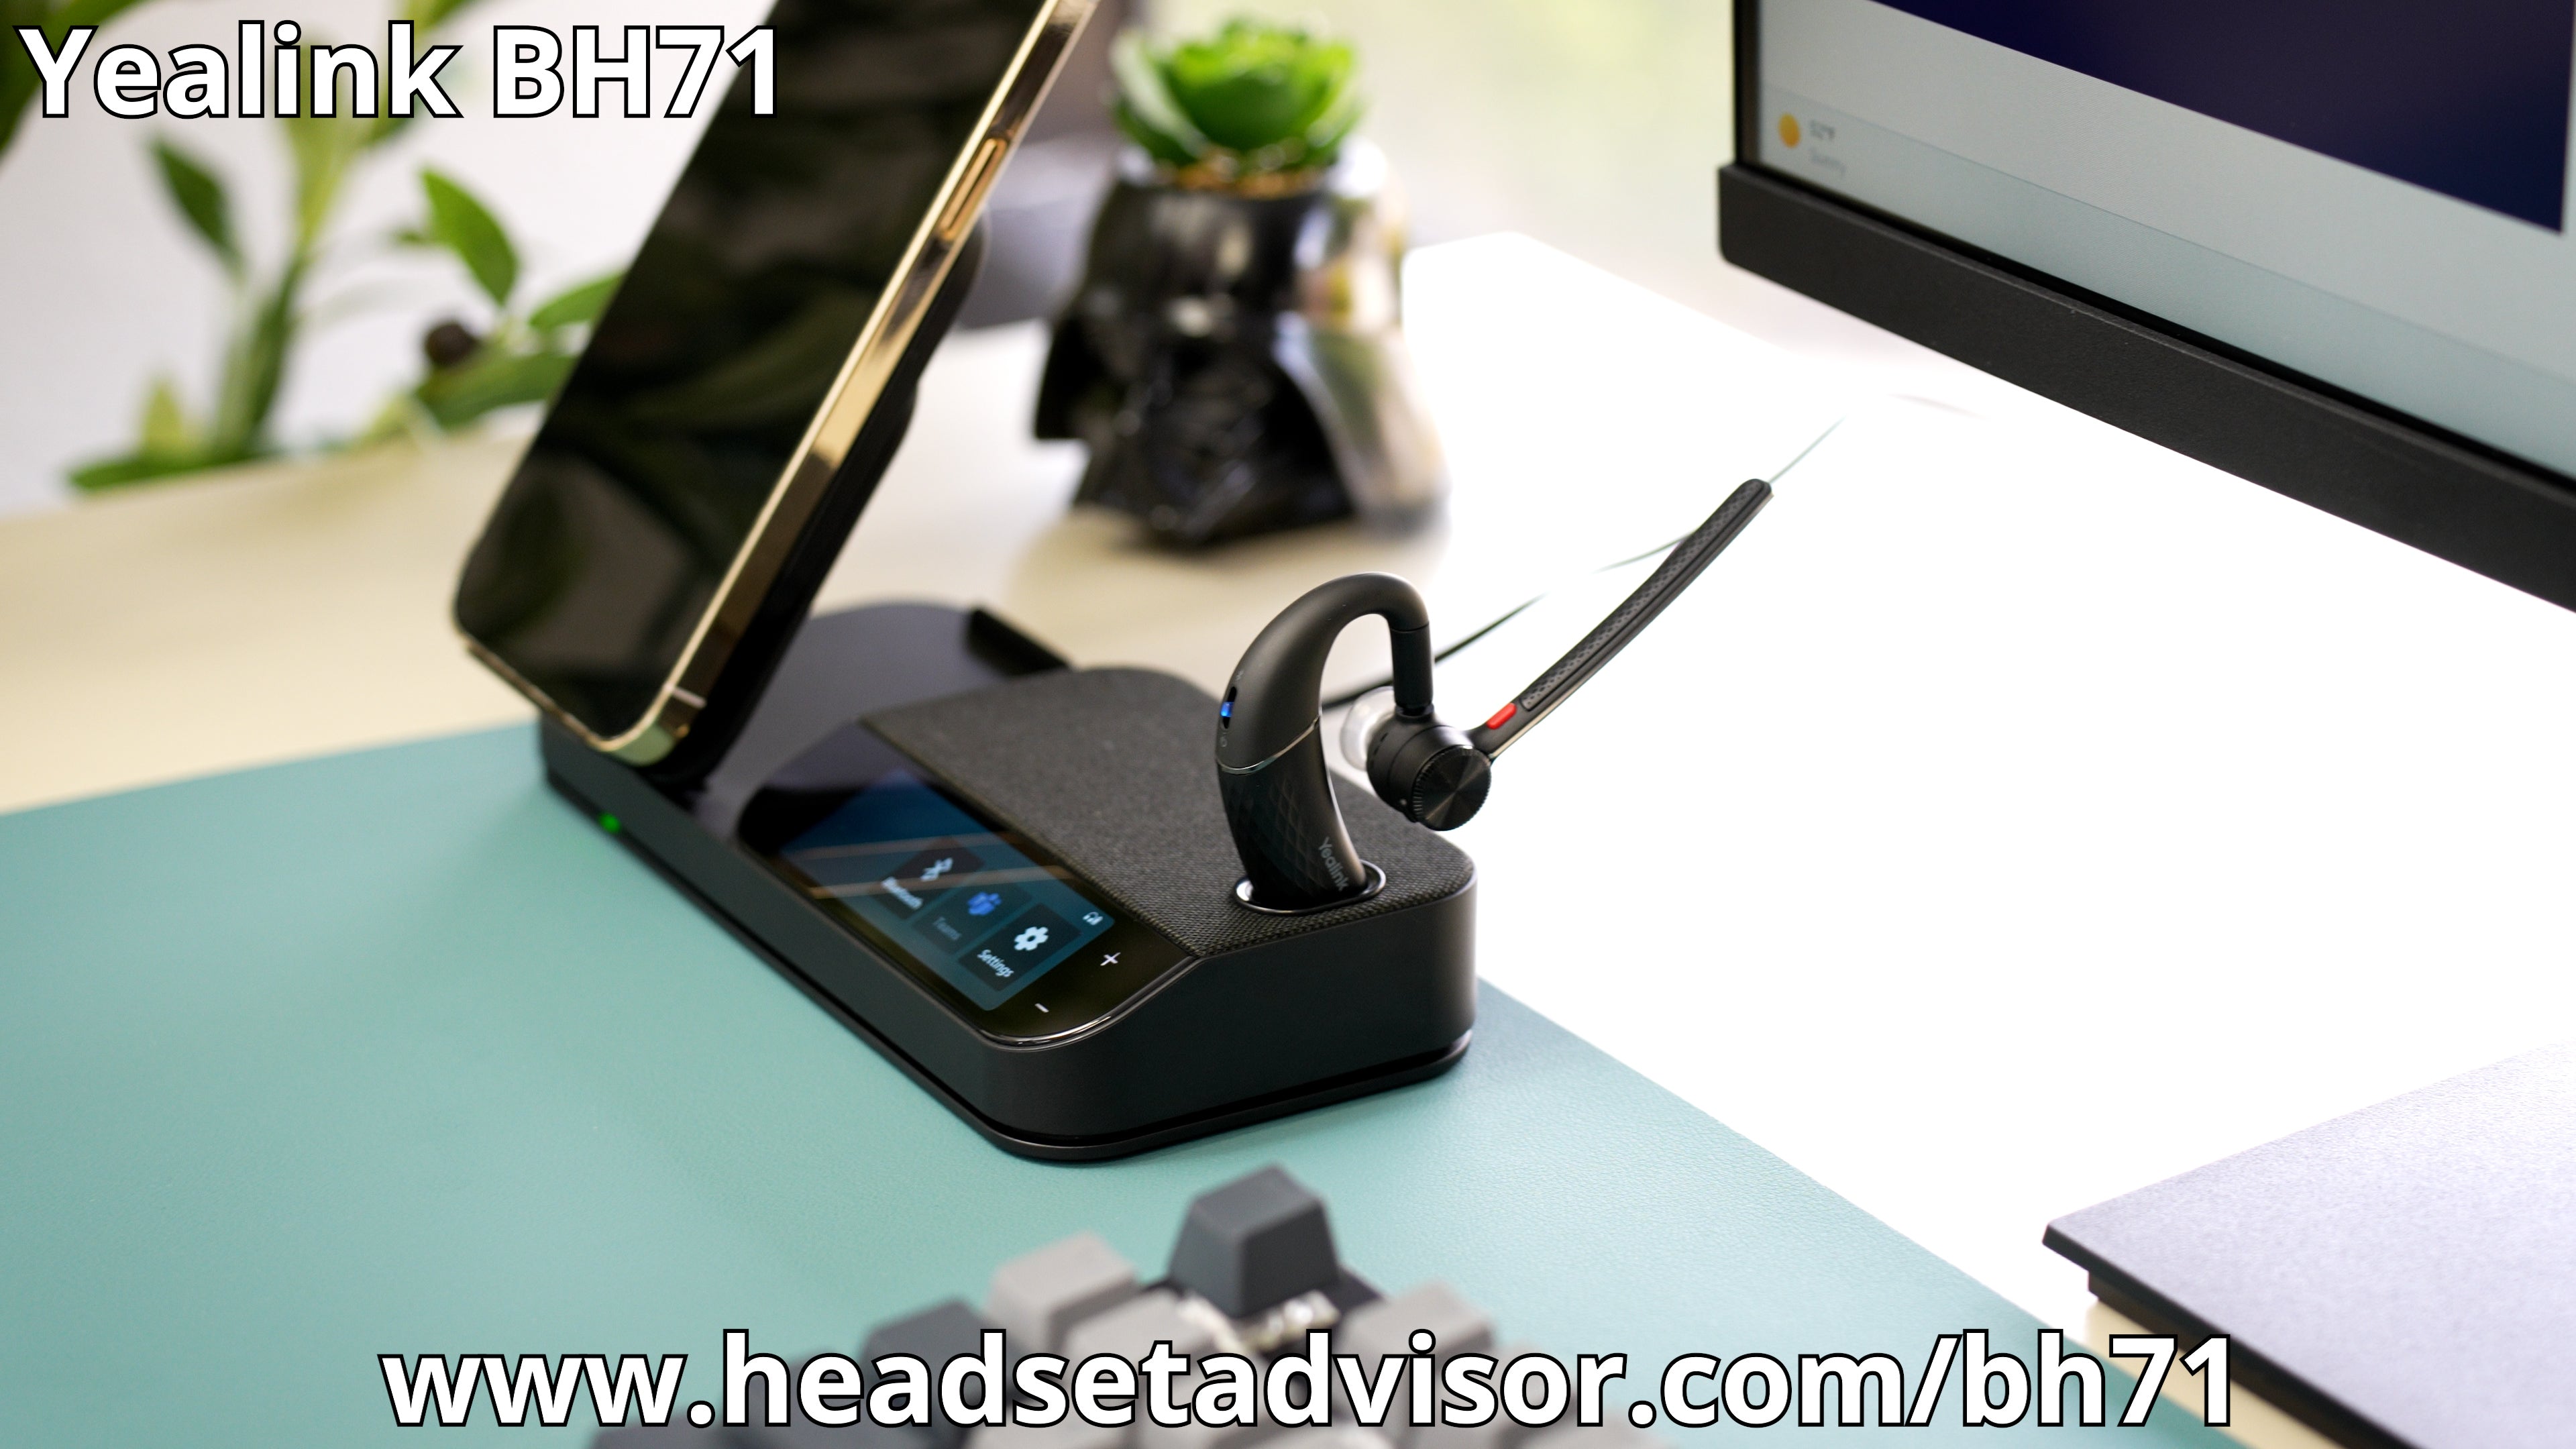 Yealink BH71 - The Most Versatile Bluetooth Wireless Headset For Work